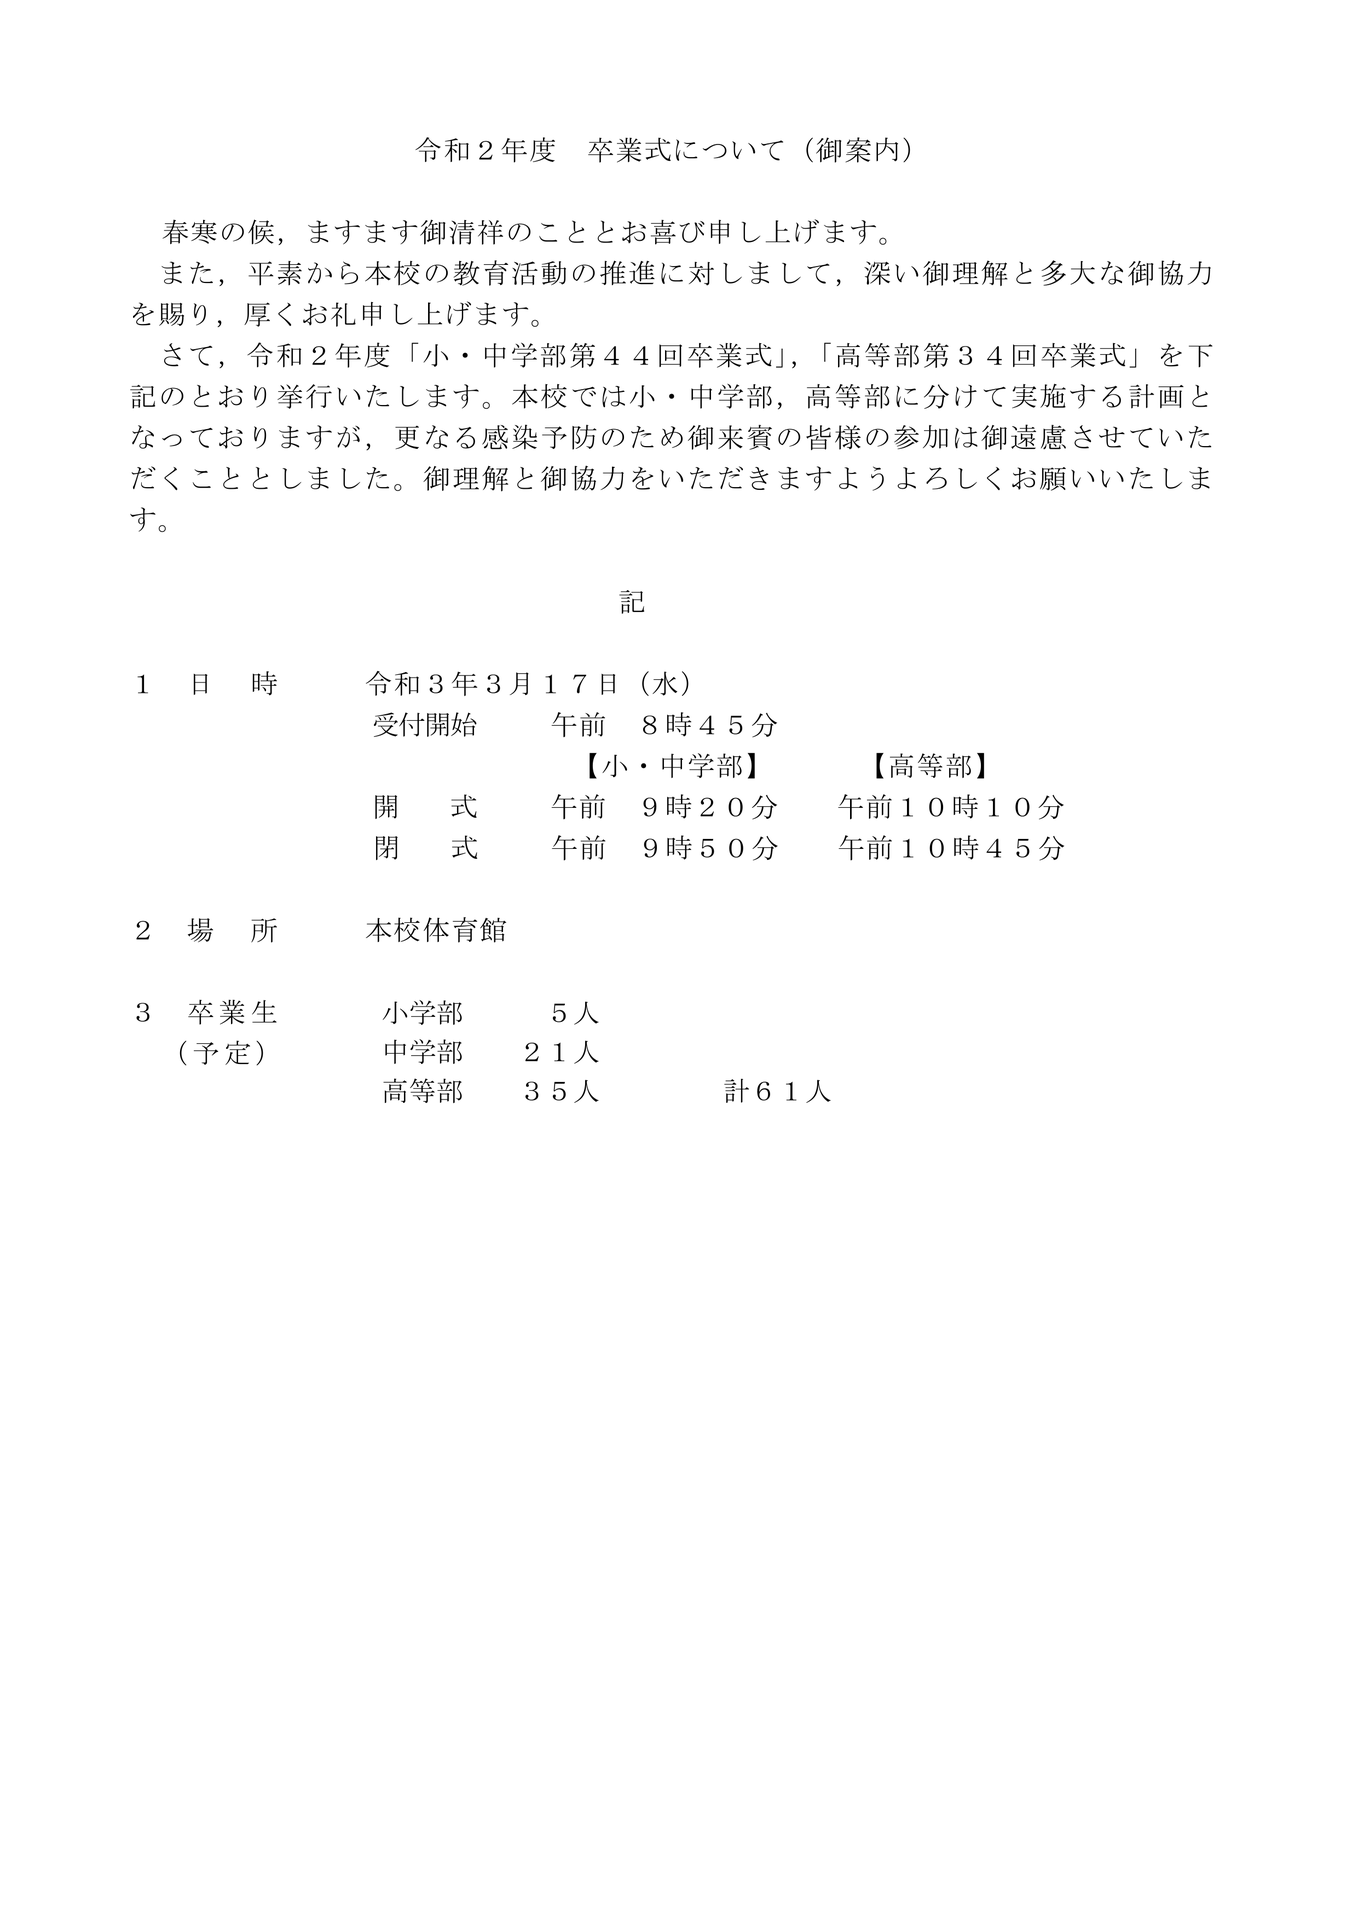 Ｒ２卒業式告示依頼HP用_imgs (1)-0001